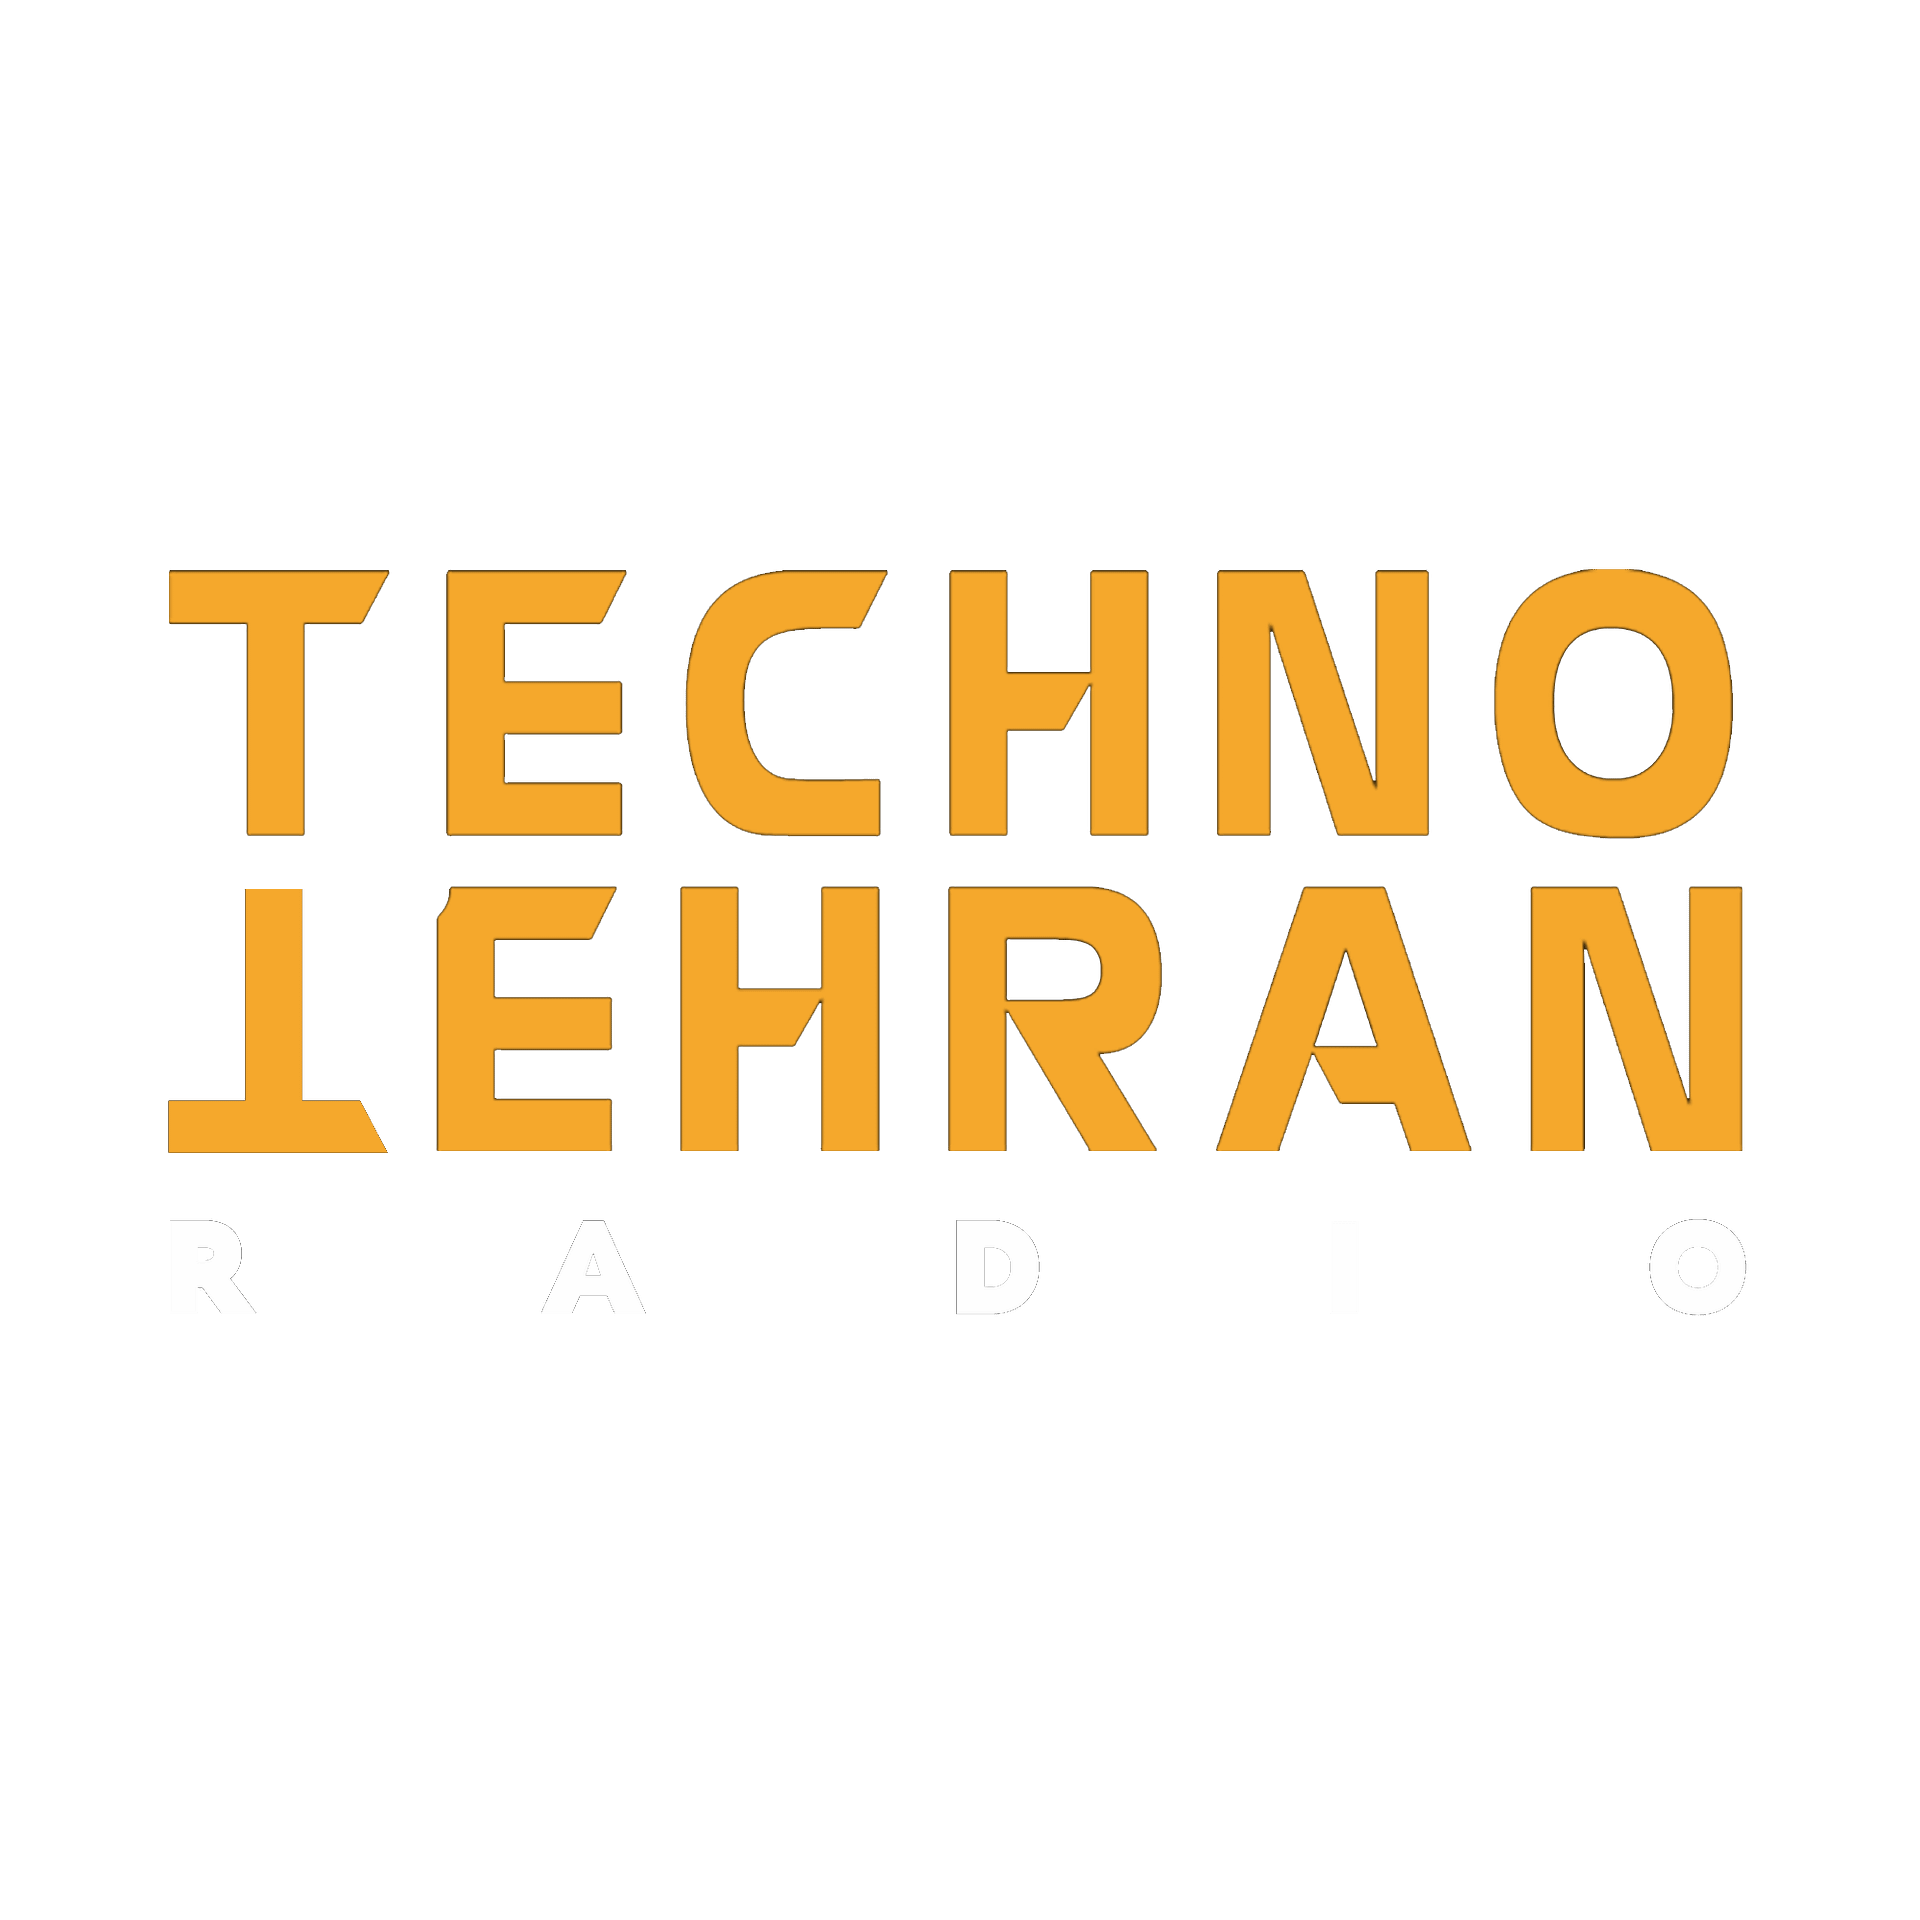 TECHNO TEHRAN RADIO